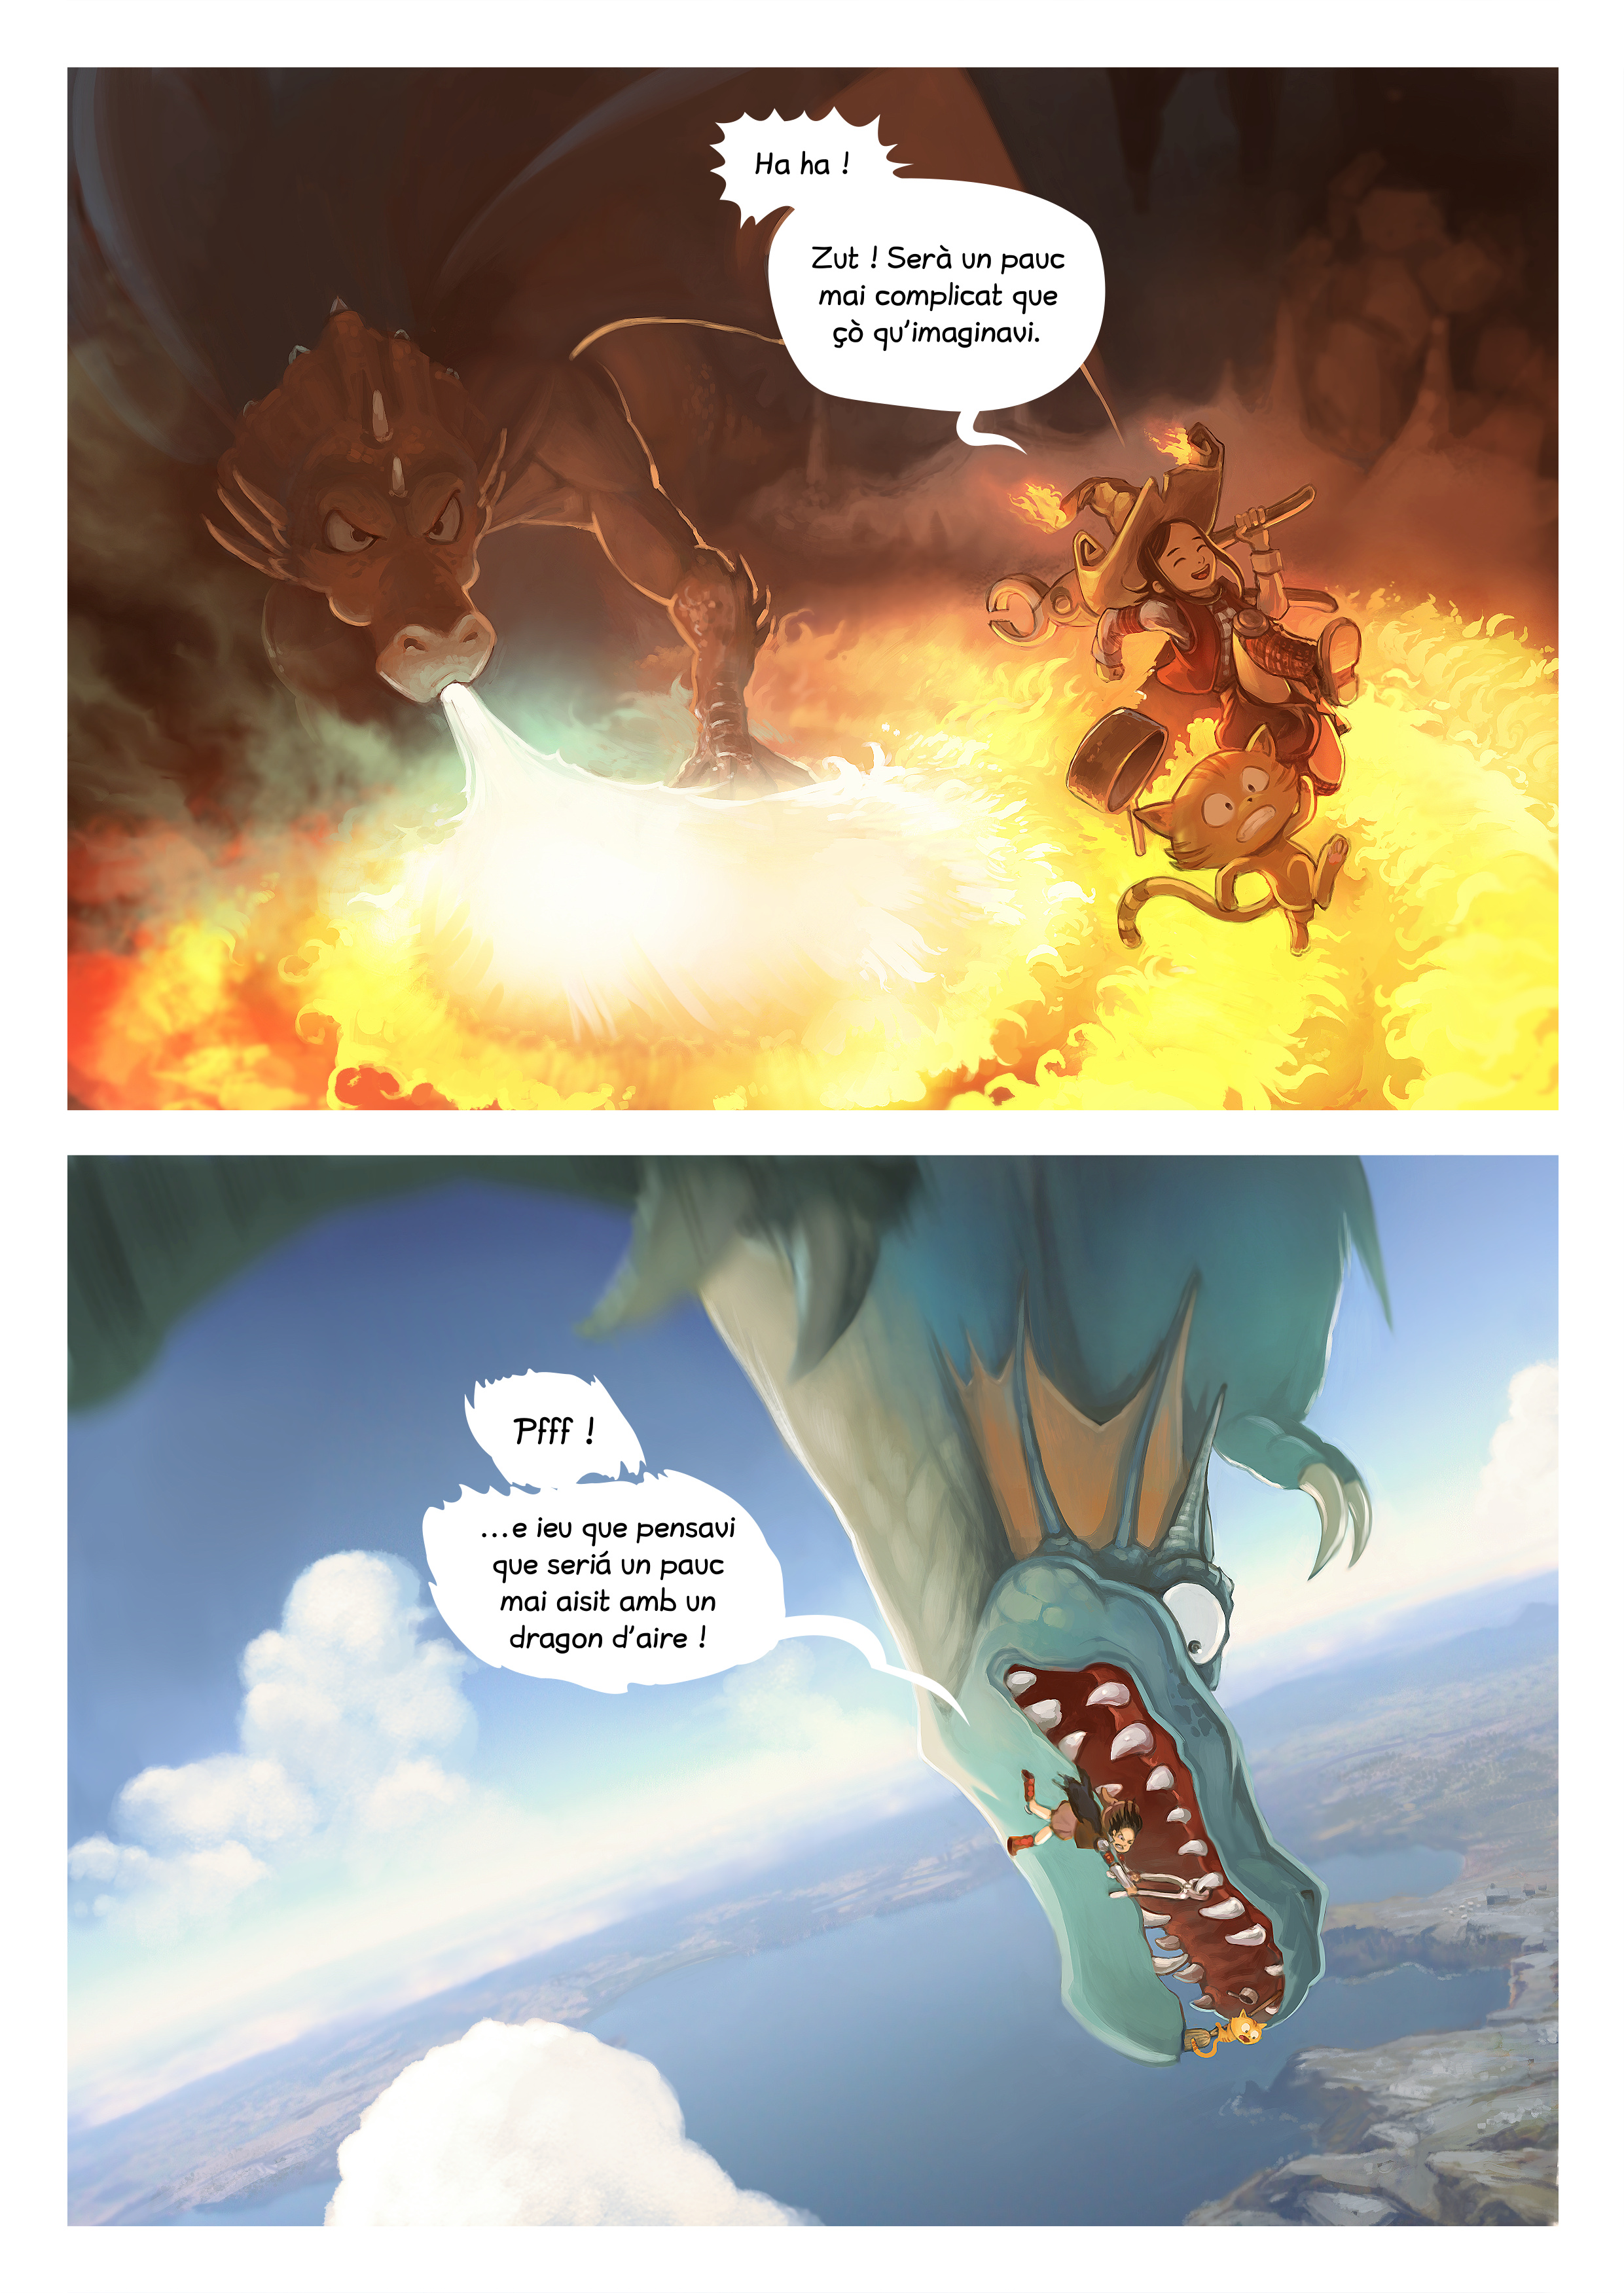 Episòdi 14 : La Dent de Dragon, Pagina